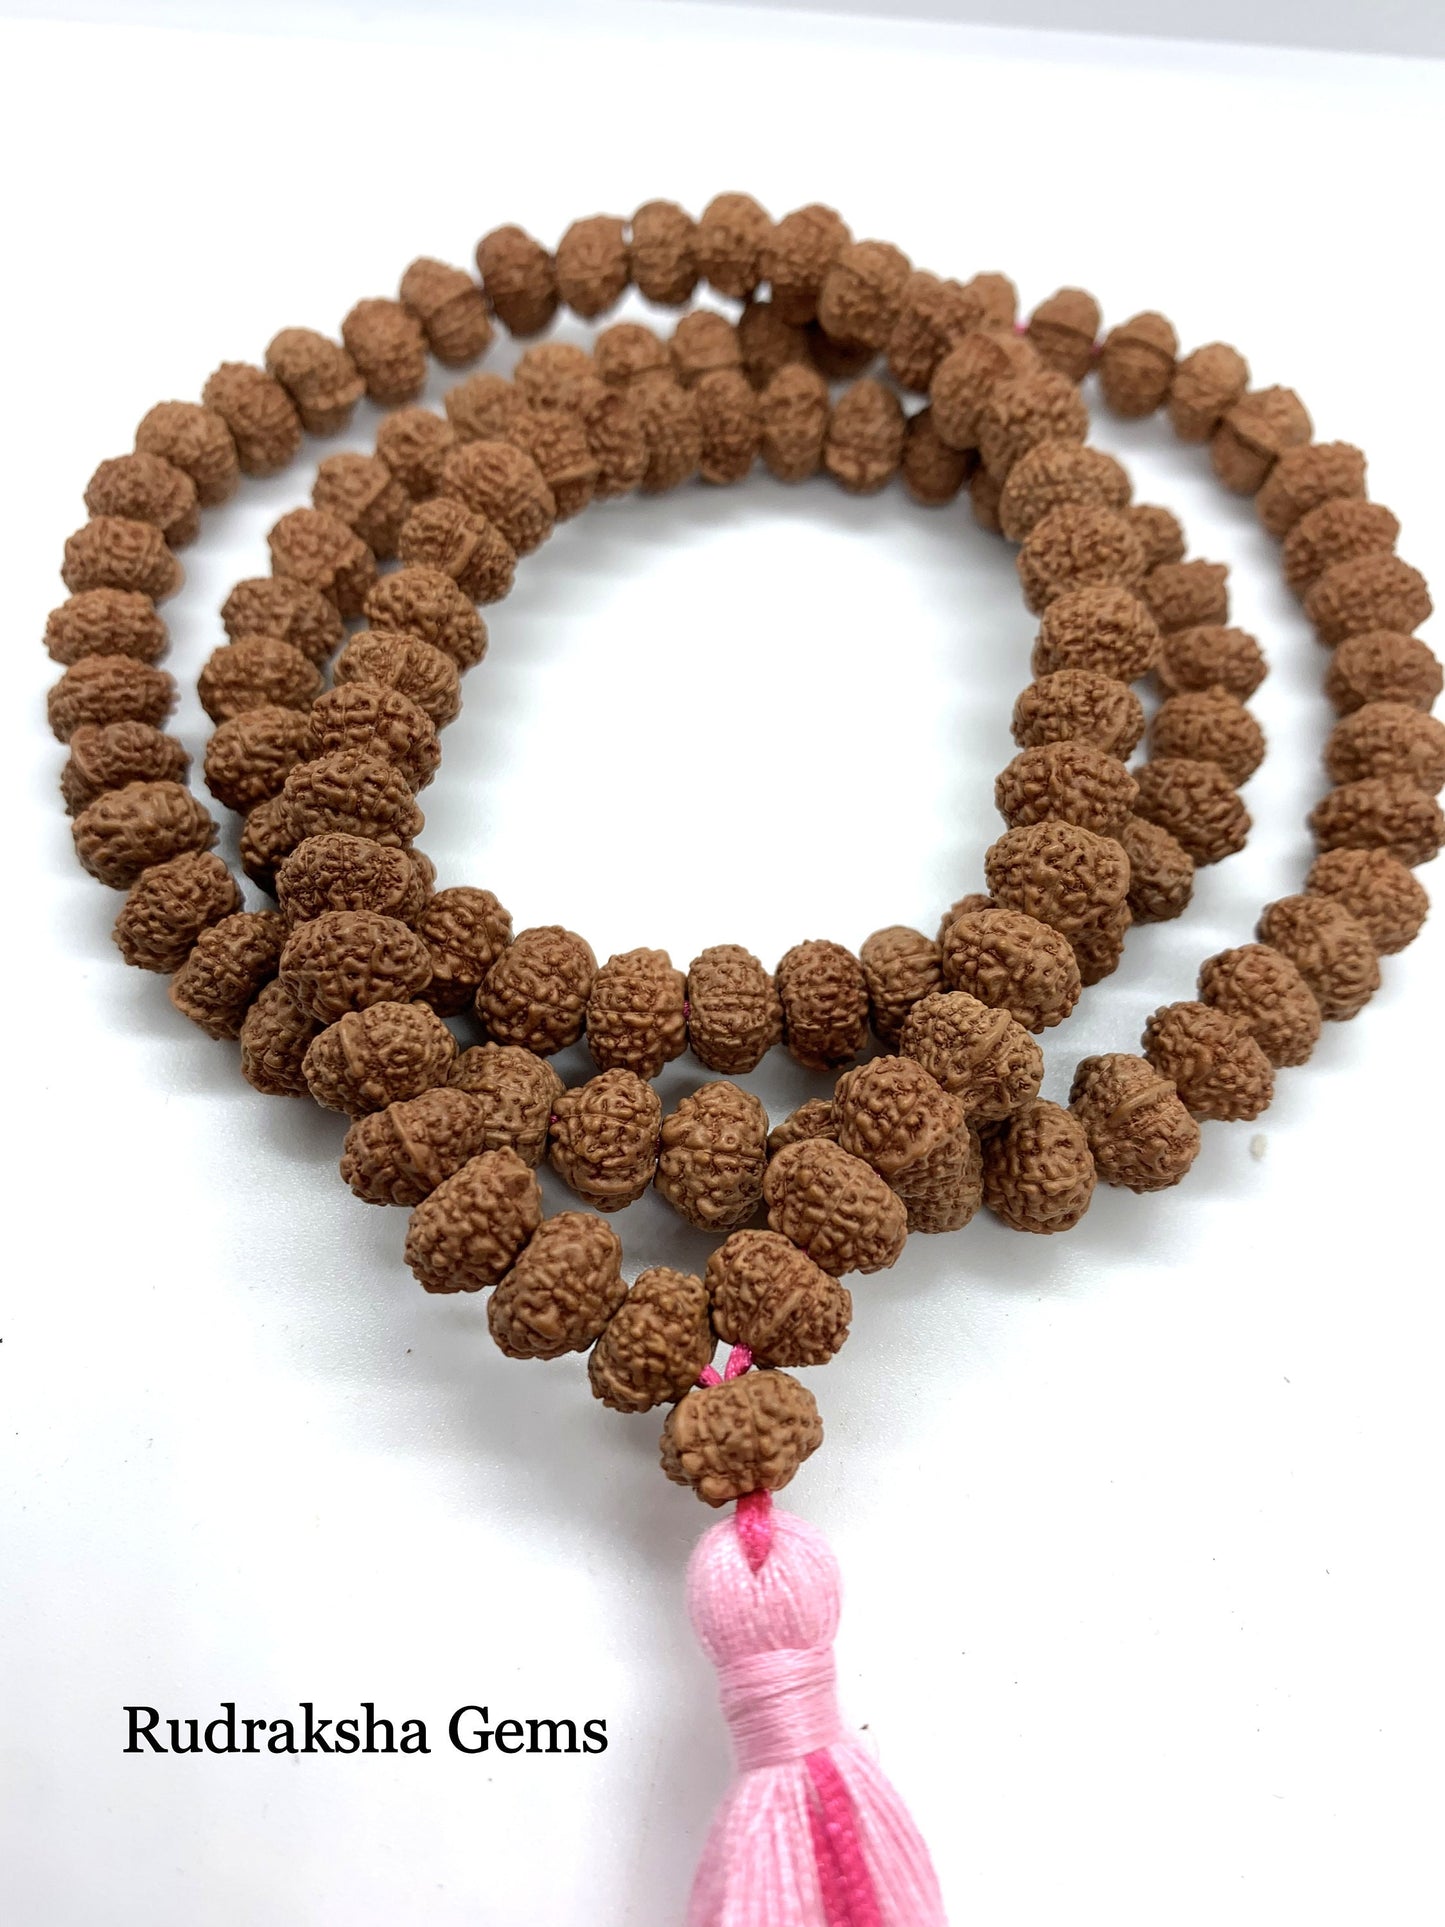 Ganesha Rudraksha Mala Indonesian 108 + 1 Beads with Trunk -Ganesha Rudraksh Beads - Ganesh Rudraksha Mala - Rudraksha Collector Mala